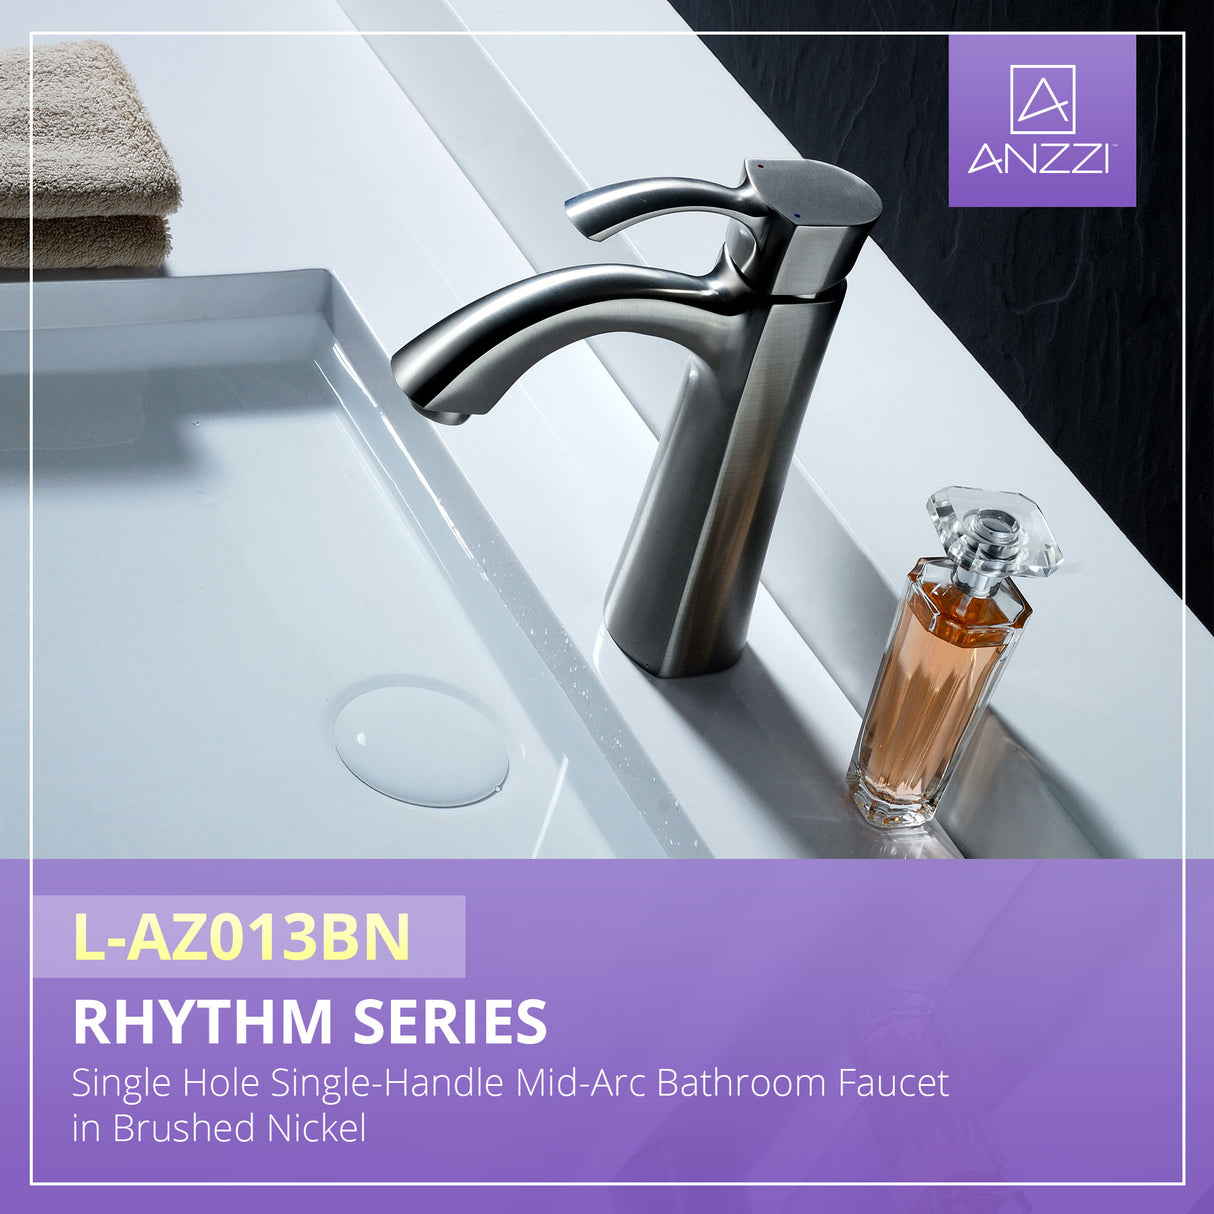 ANZZI L-AZ013BN Rhythm Series Single Hole Single-Handle Mid-Arc Bathroom Faucet in Brushed Nickel